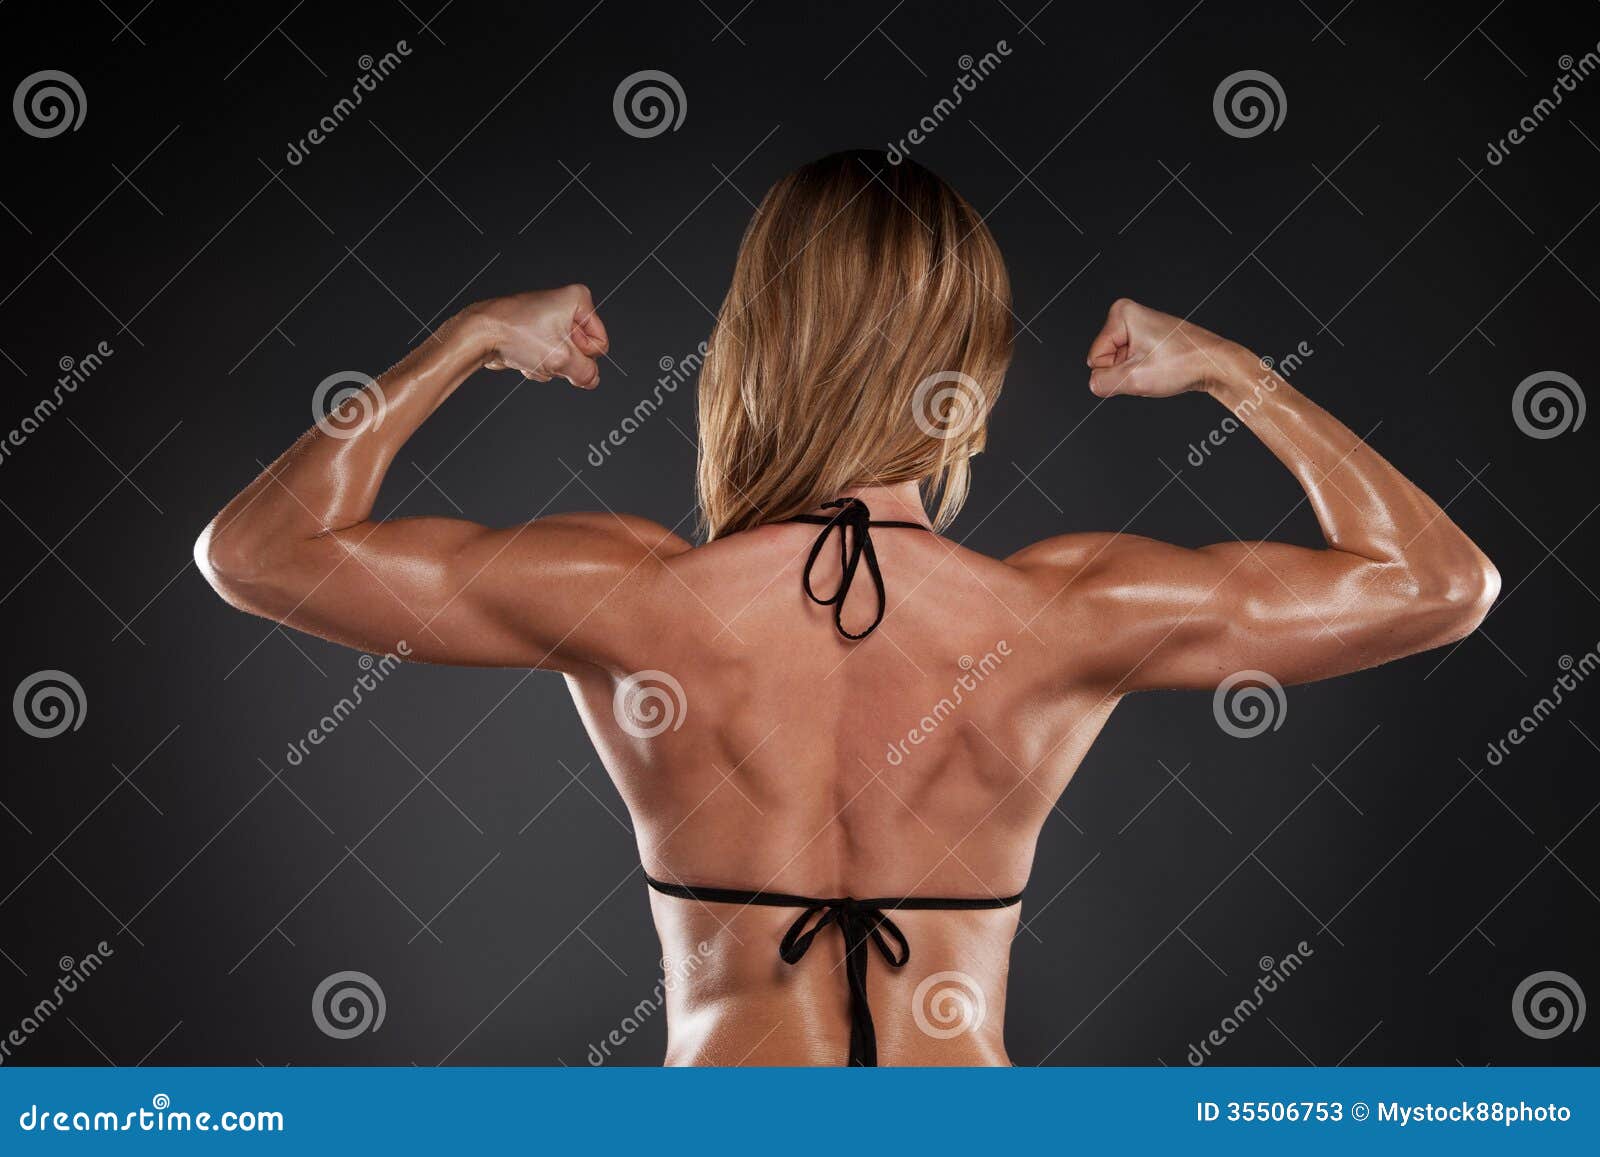 Muscular Female Back in Black Bikini. Stock Image - Image of hands,  athlete: 35506753